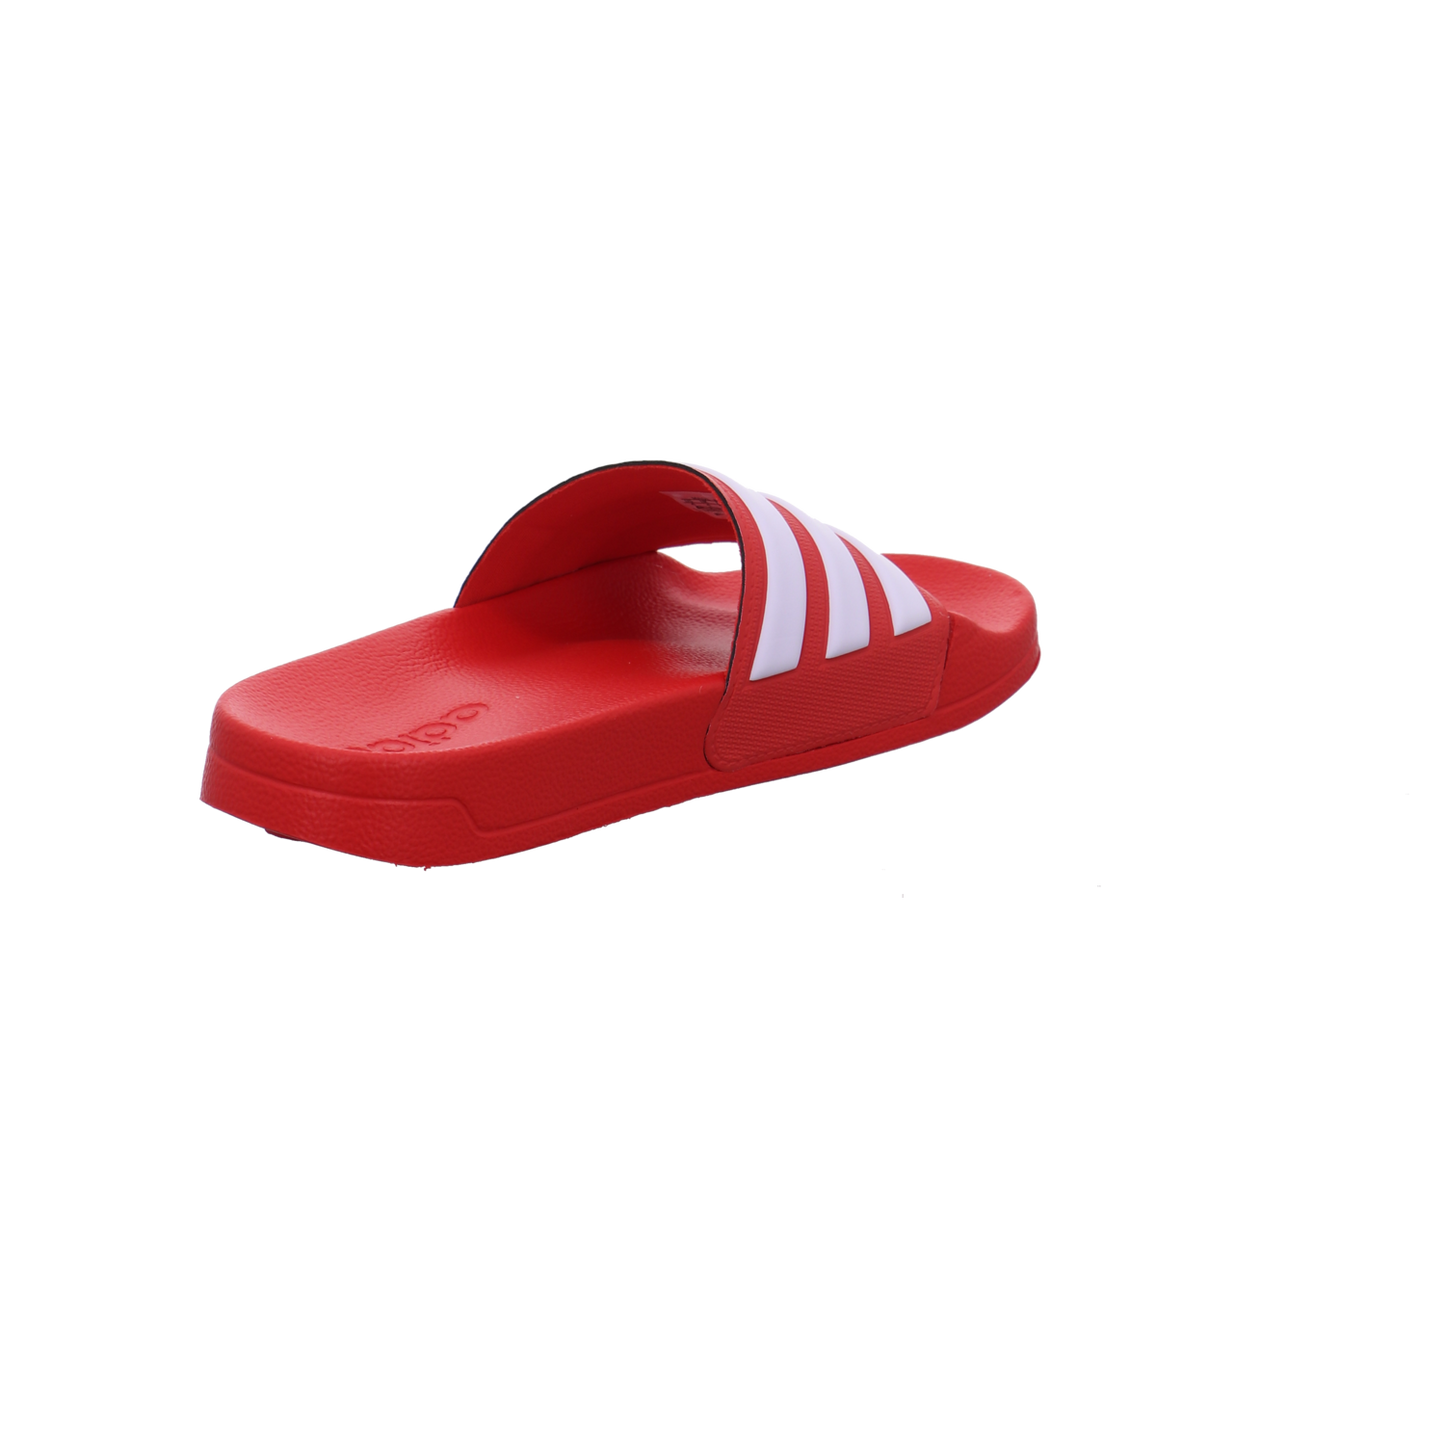 Adidas Schuhe  rot Bild5